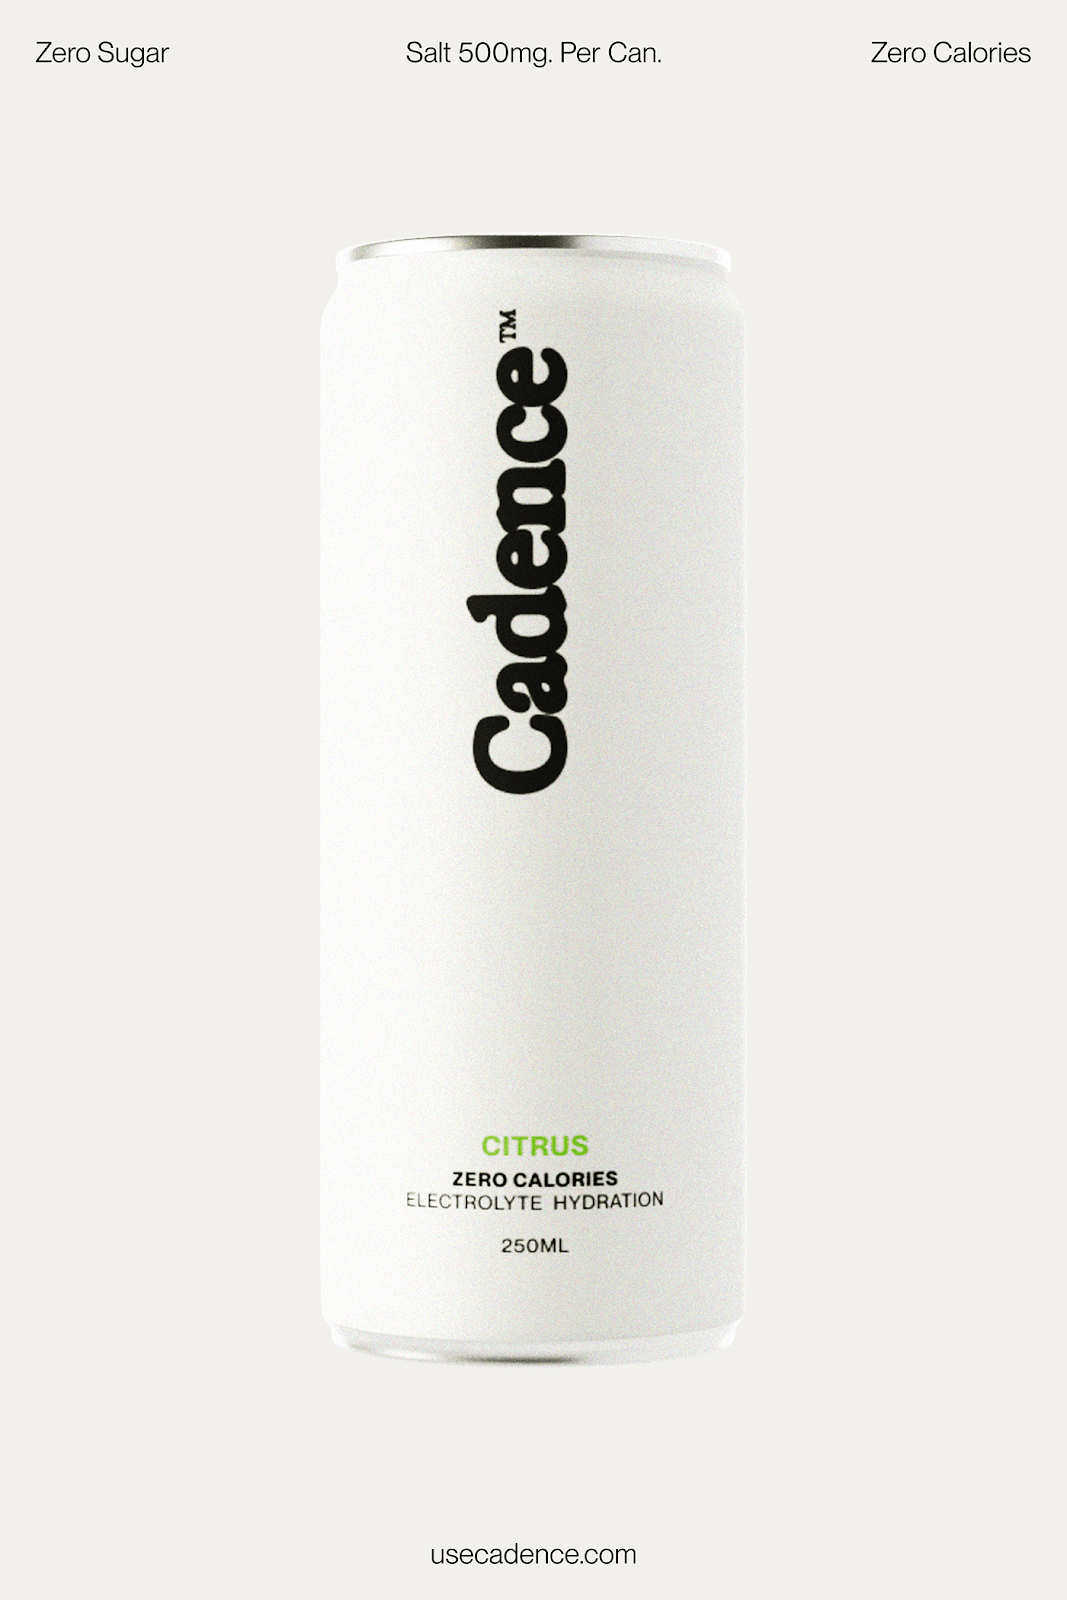 Artifact from the Cadence’s Exquisite Branding & Packaging Design article on Abduzeedo